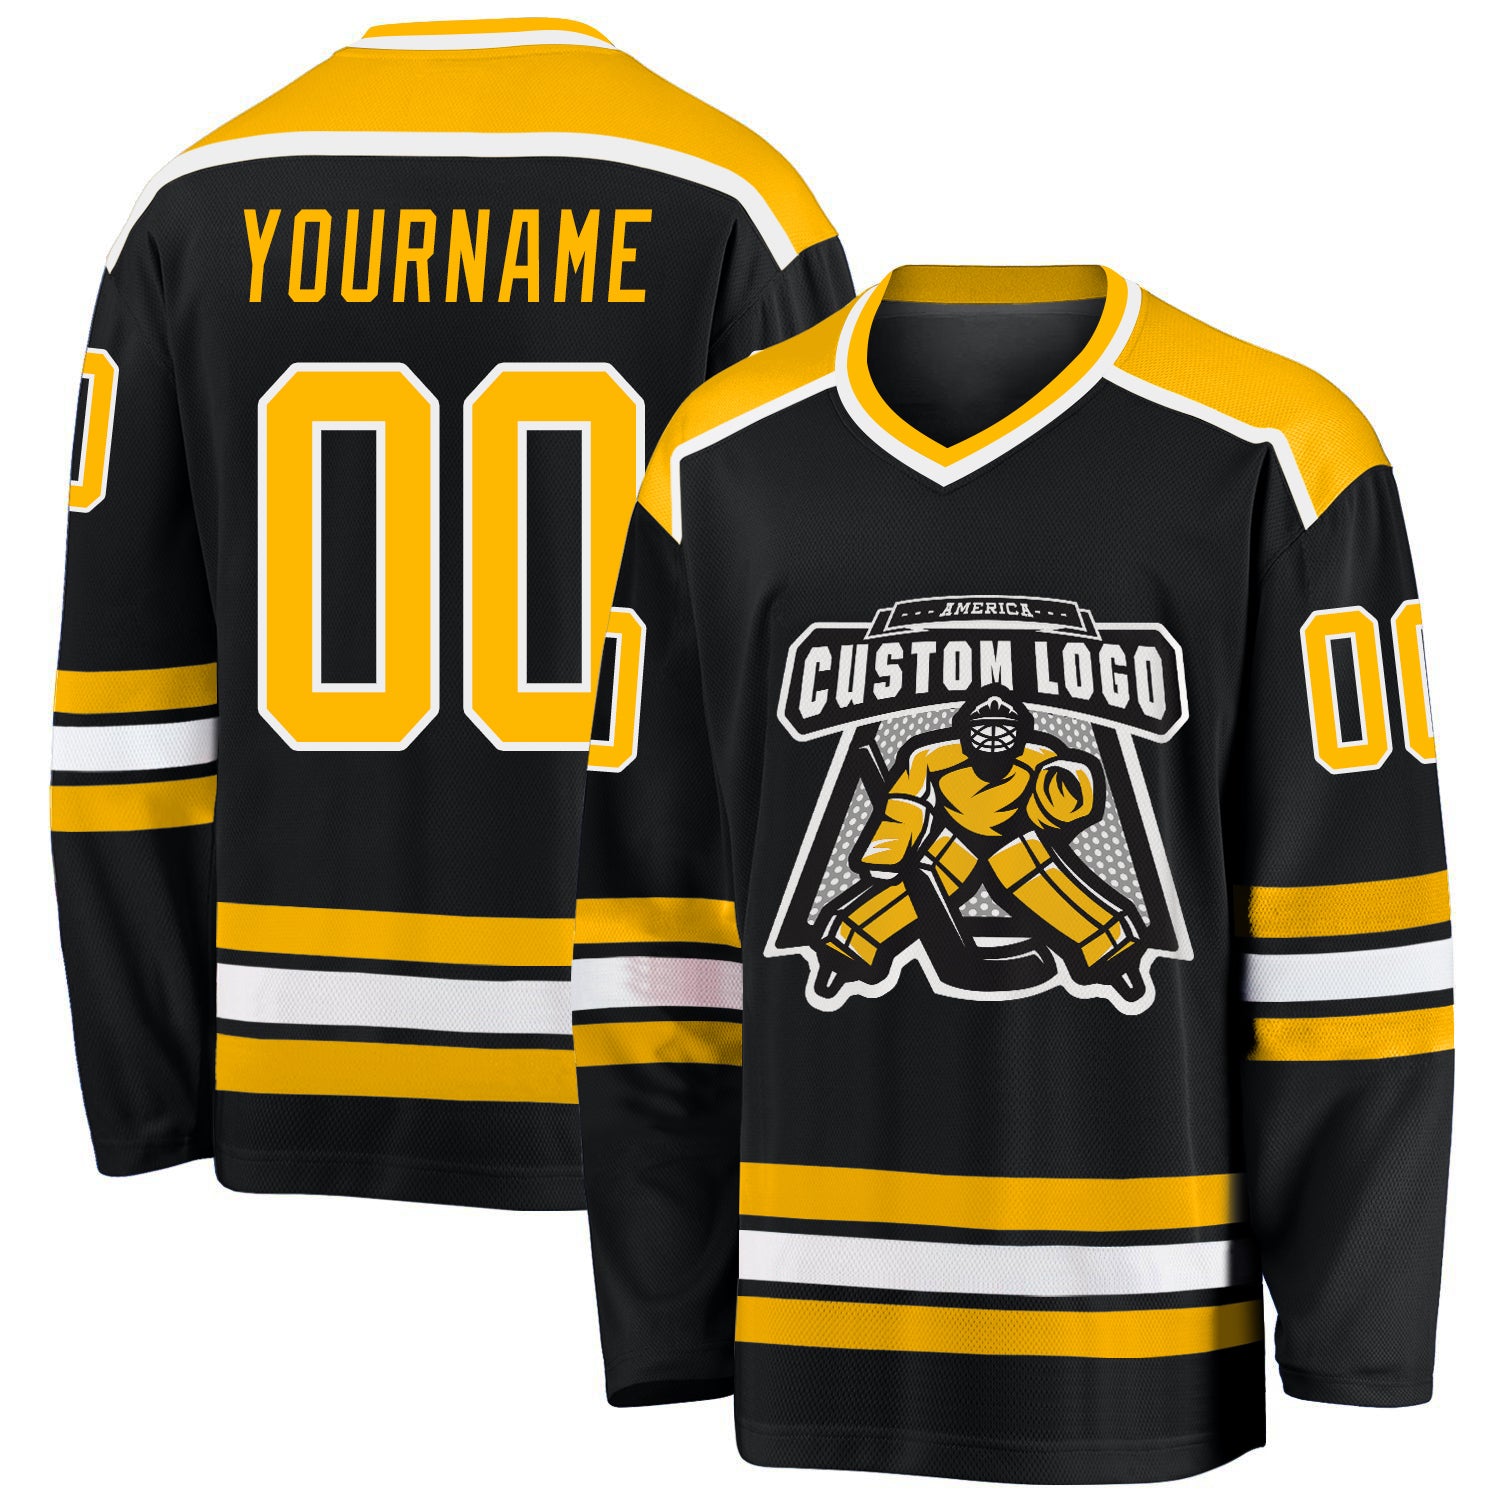 Boston Bruins Jerseys S 5XL Personalized Customized Jerseys With